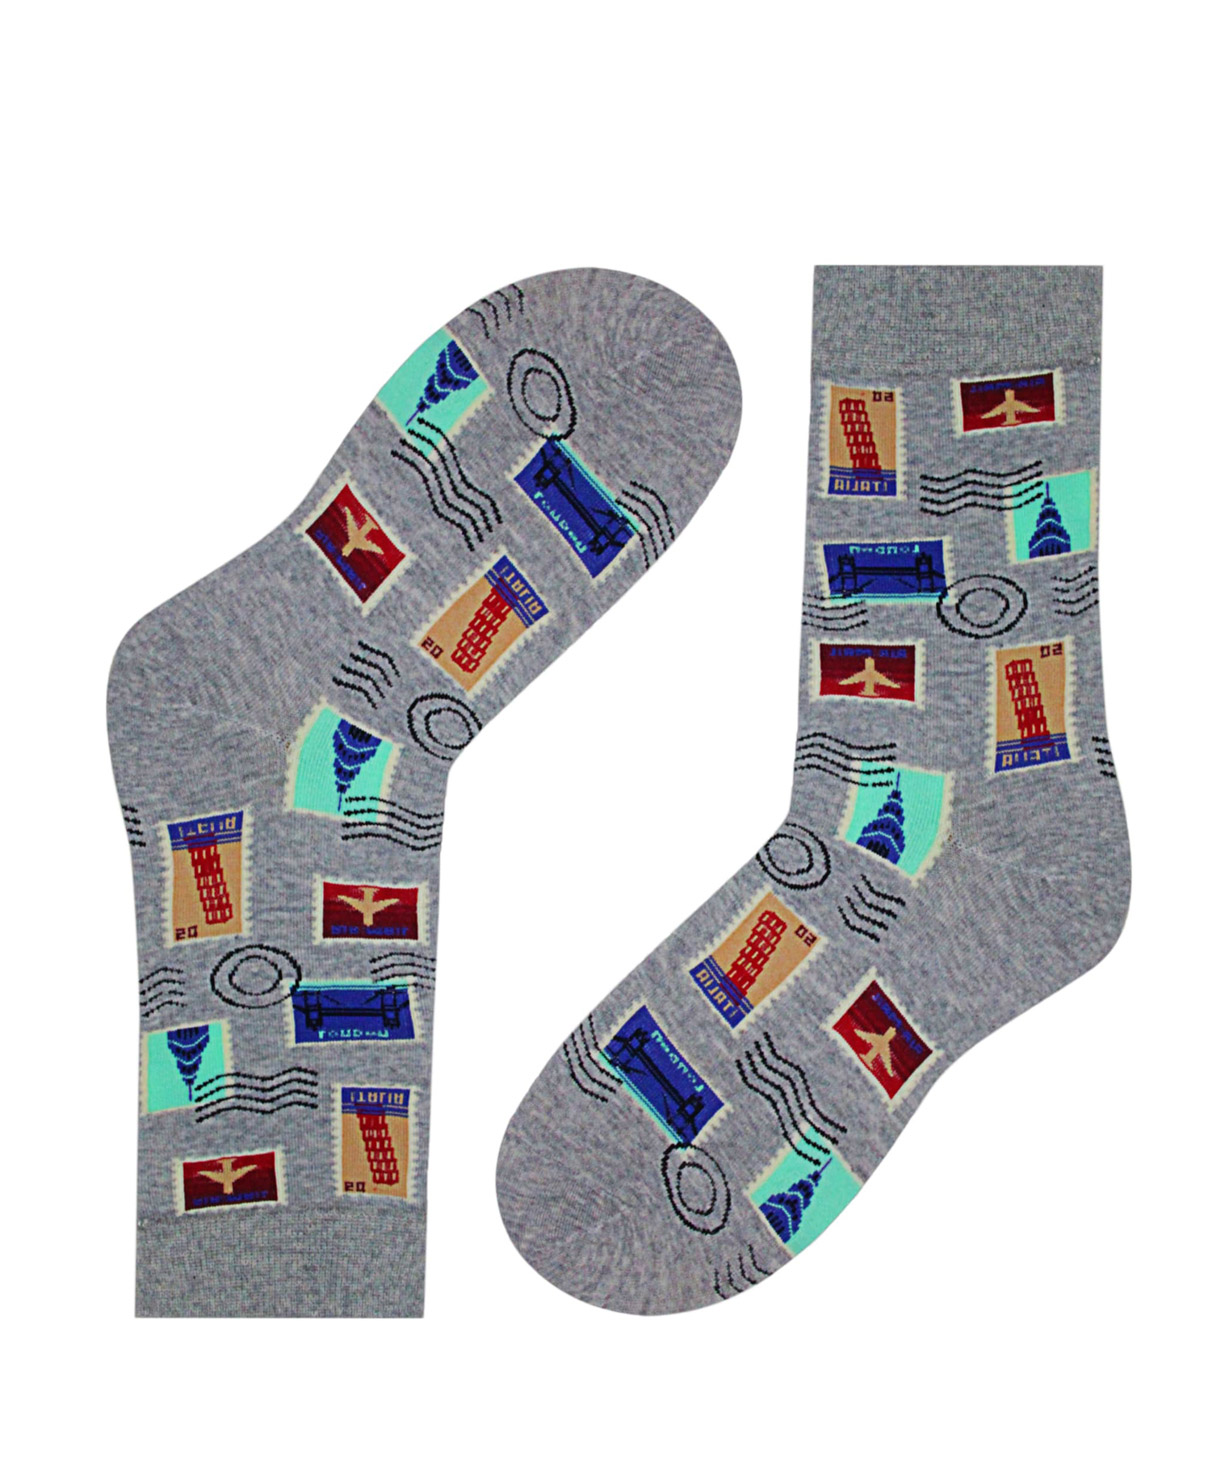 Socks `Zeal Socks` post stickers